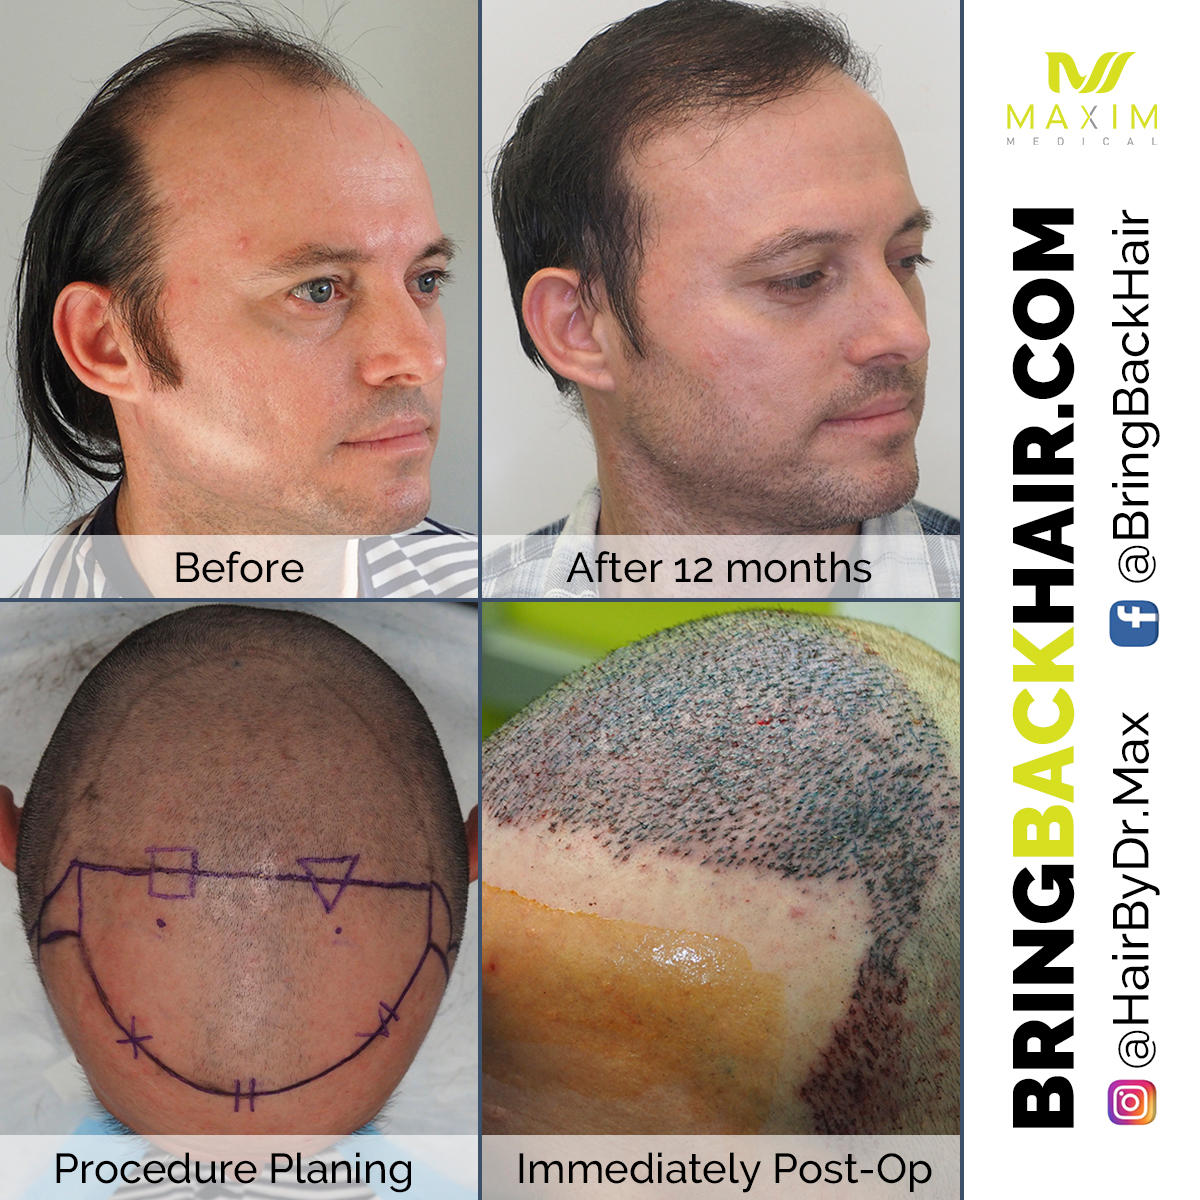 MAXIM MEDICAL, Robotic Hair Transplant Clinic Photo